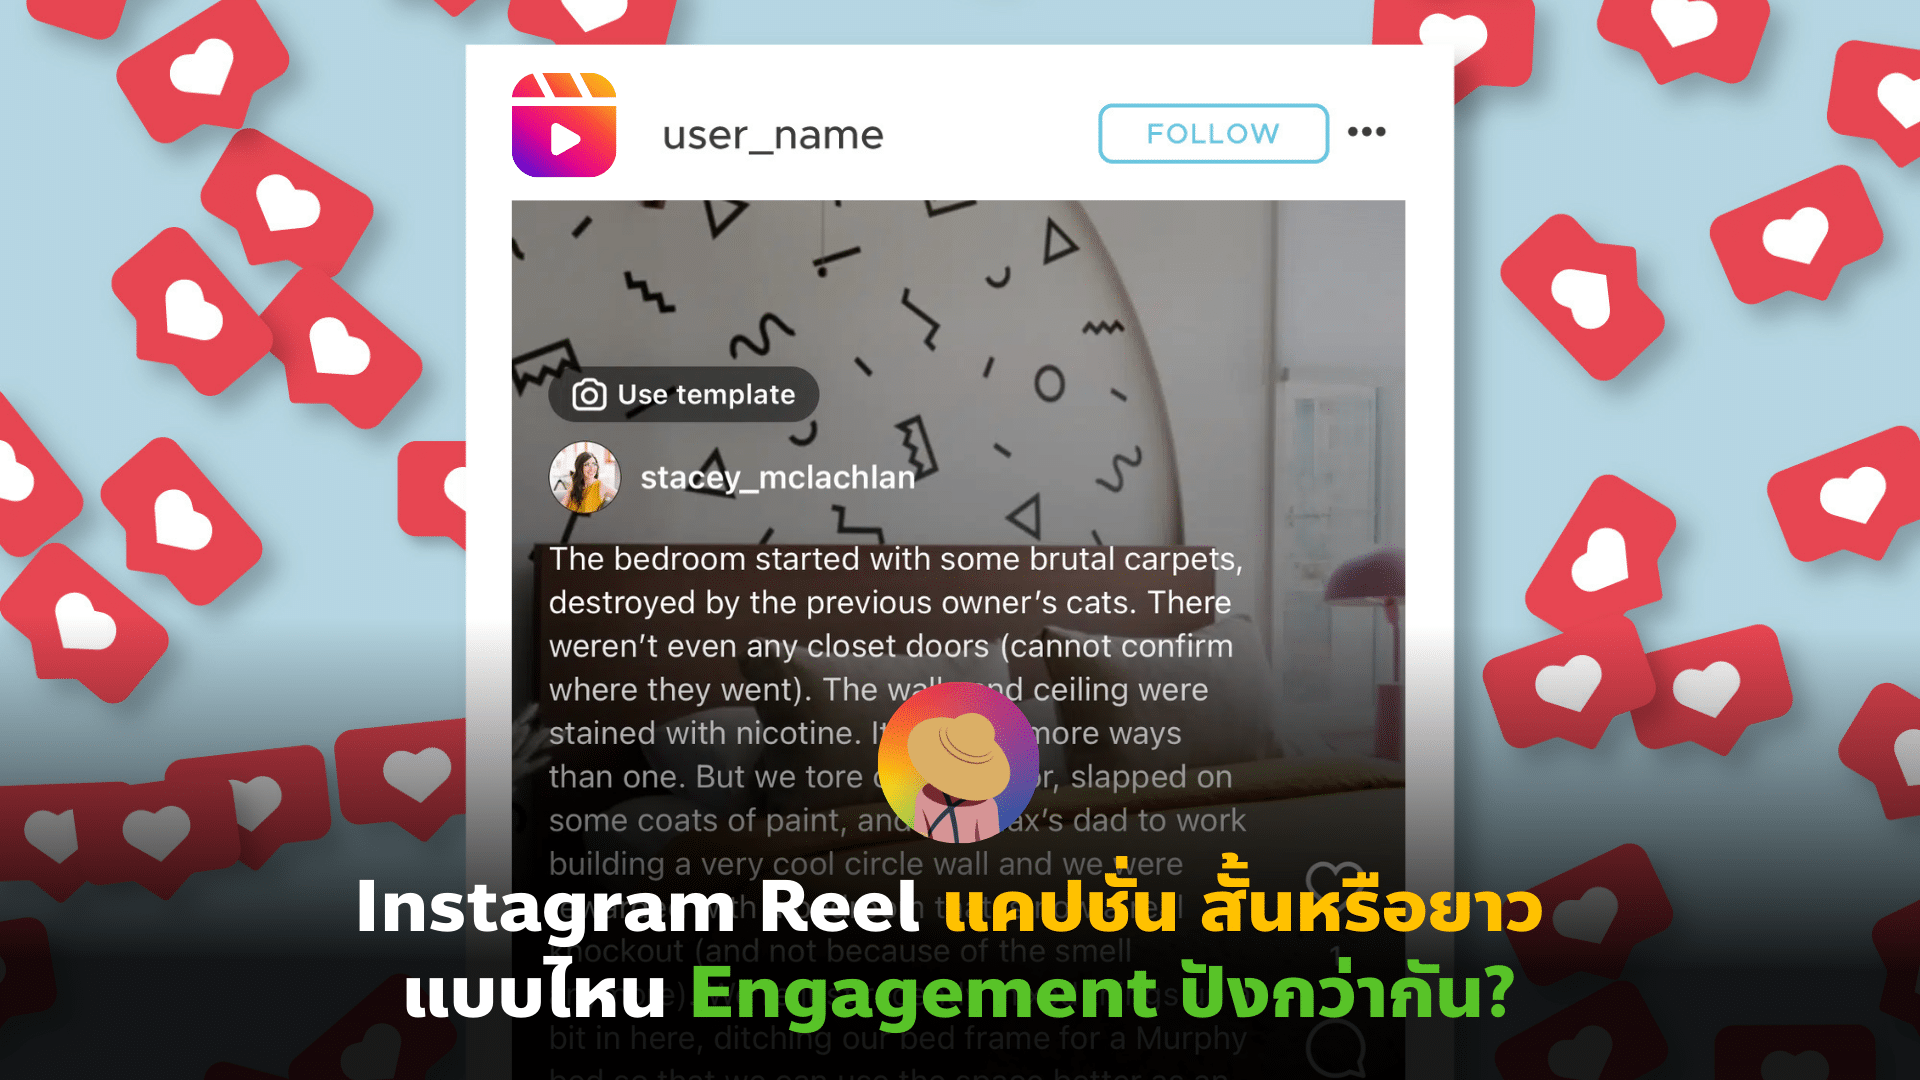 Instagram Reel แคปชั่น สั้นหรือยาว แบบไหน Engagement ปังกว่ากัน?